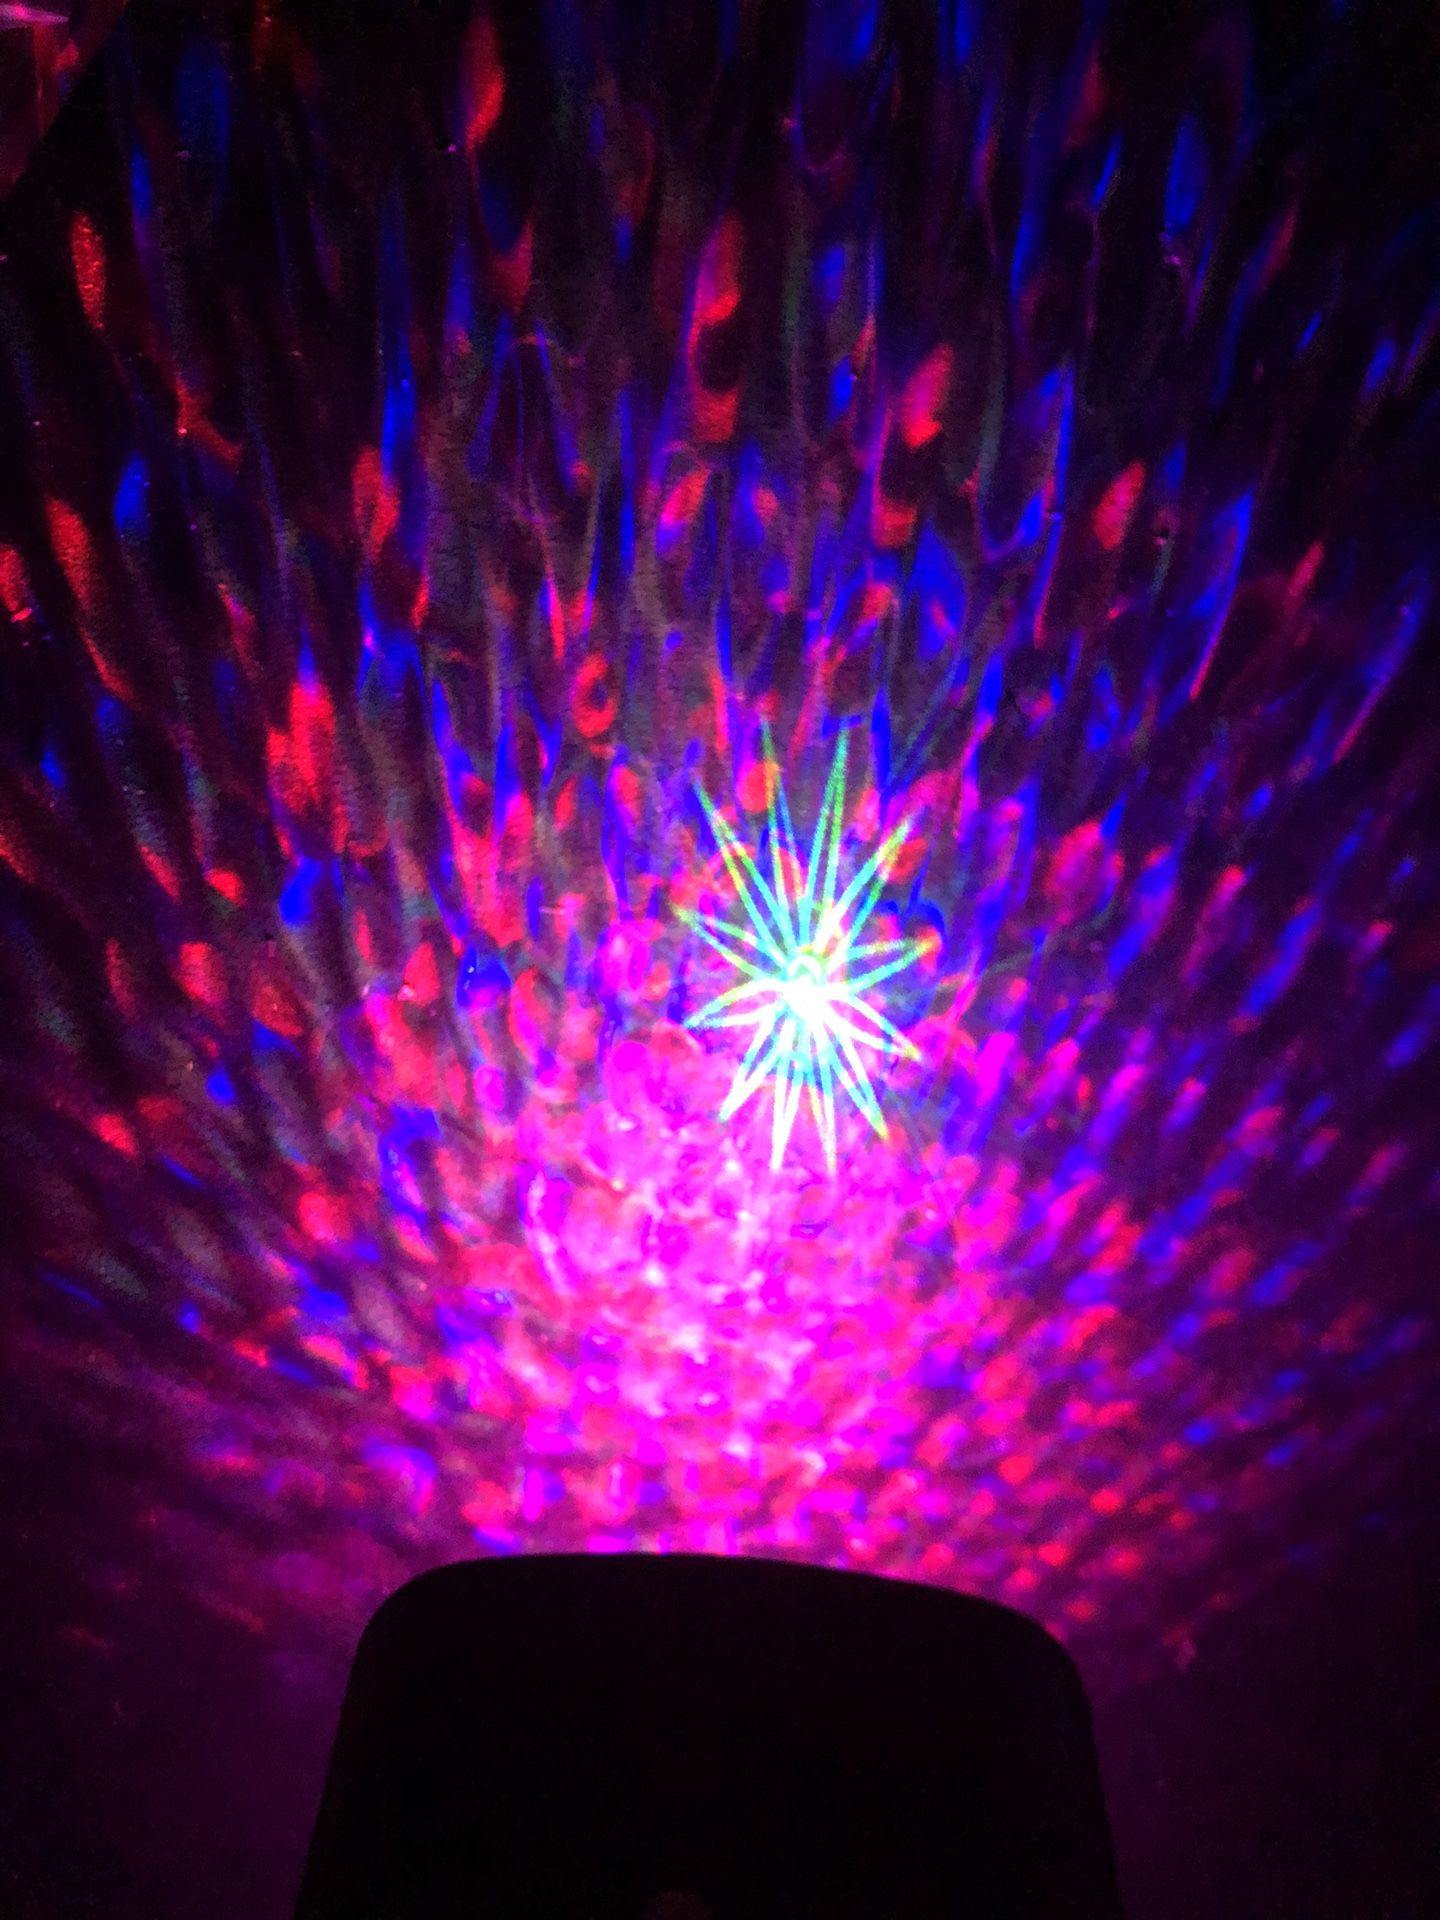 led stage lights laser lights with ball lights sound activated strobe lights for party dj lights